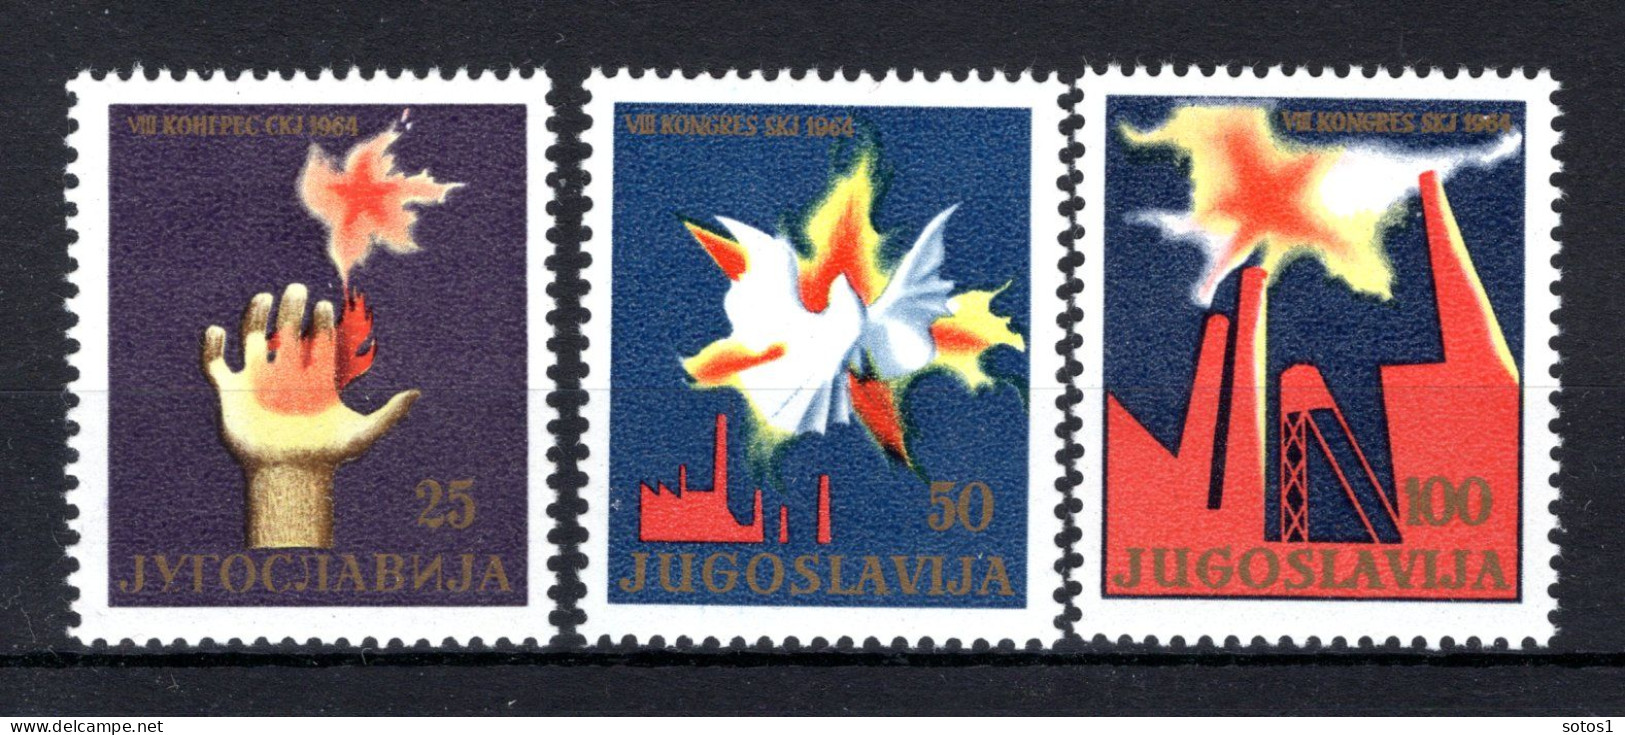 JOEGOSLAVIE Yt. 998/1000 MNH 1964 - Unused Stamps